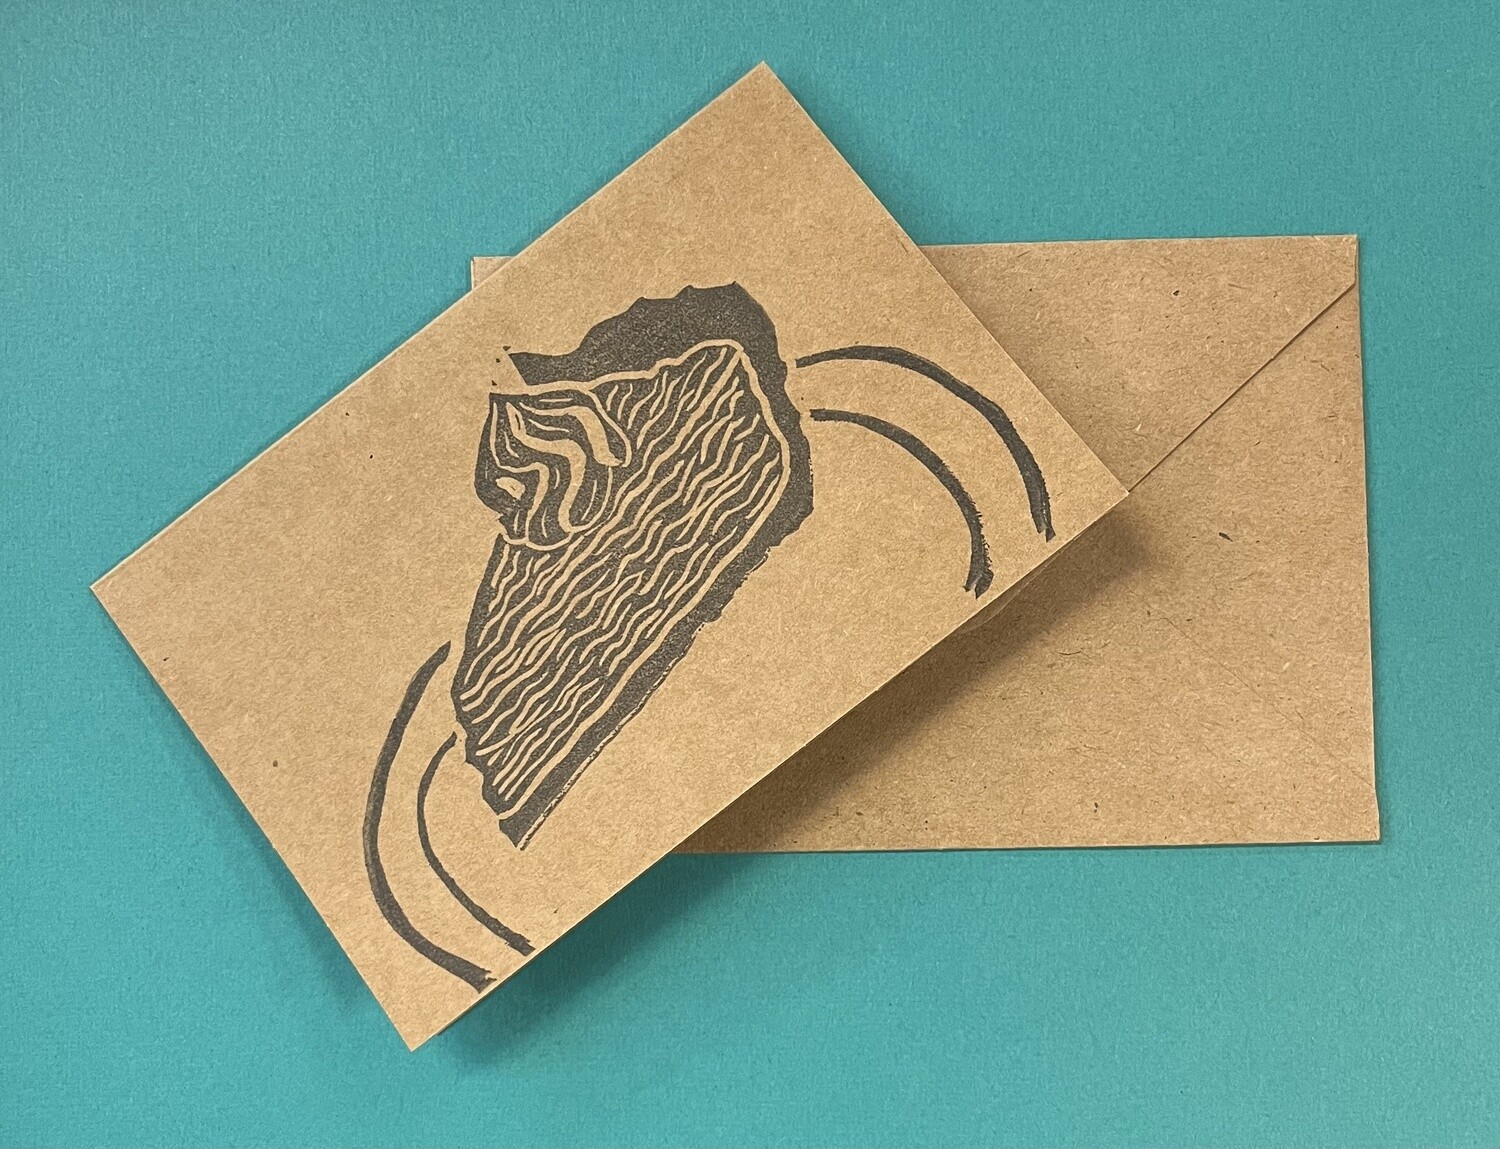 Great Slice 'o Pie - Holly-Daze Greeting Card by Kaiju Cabal